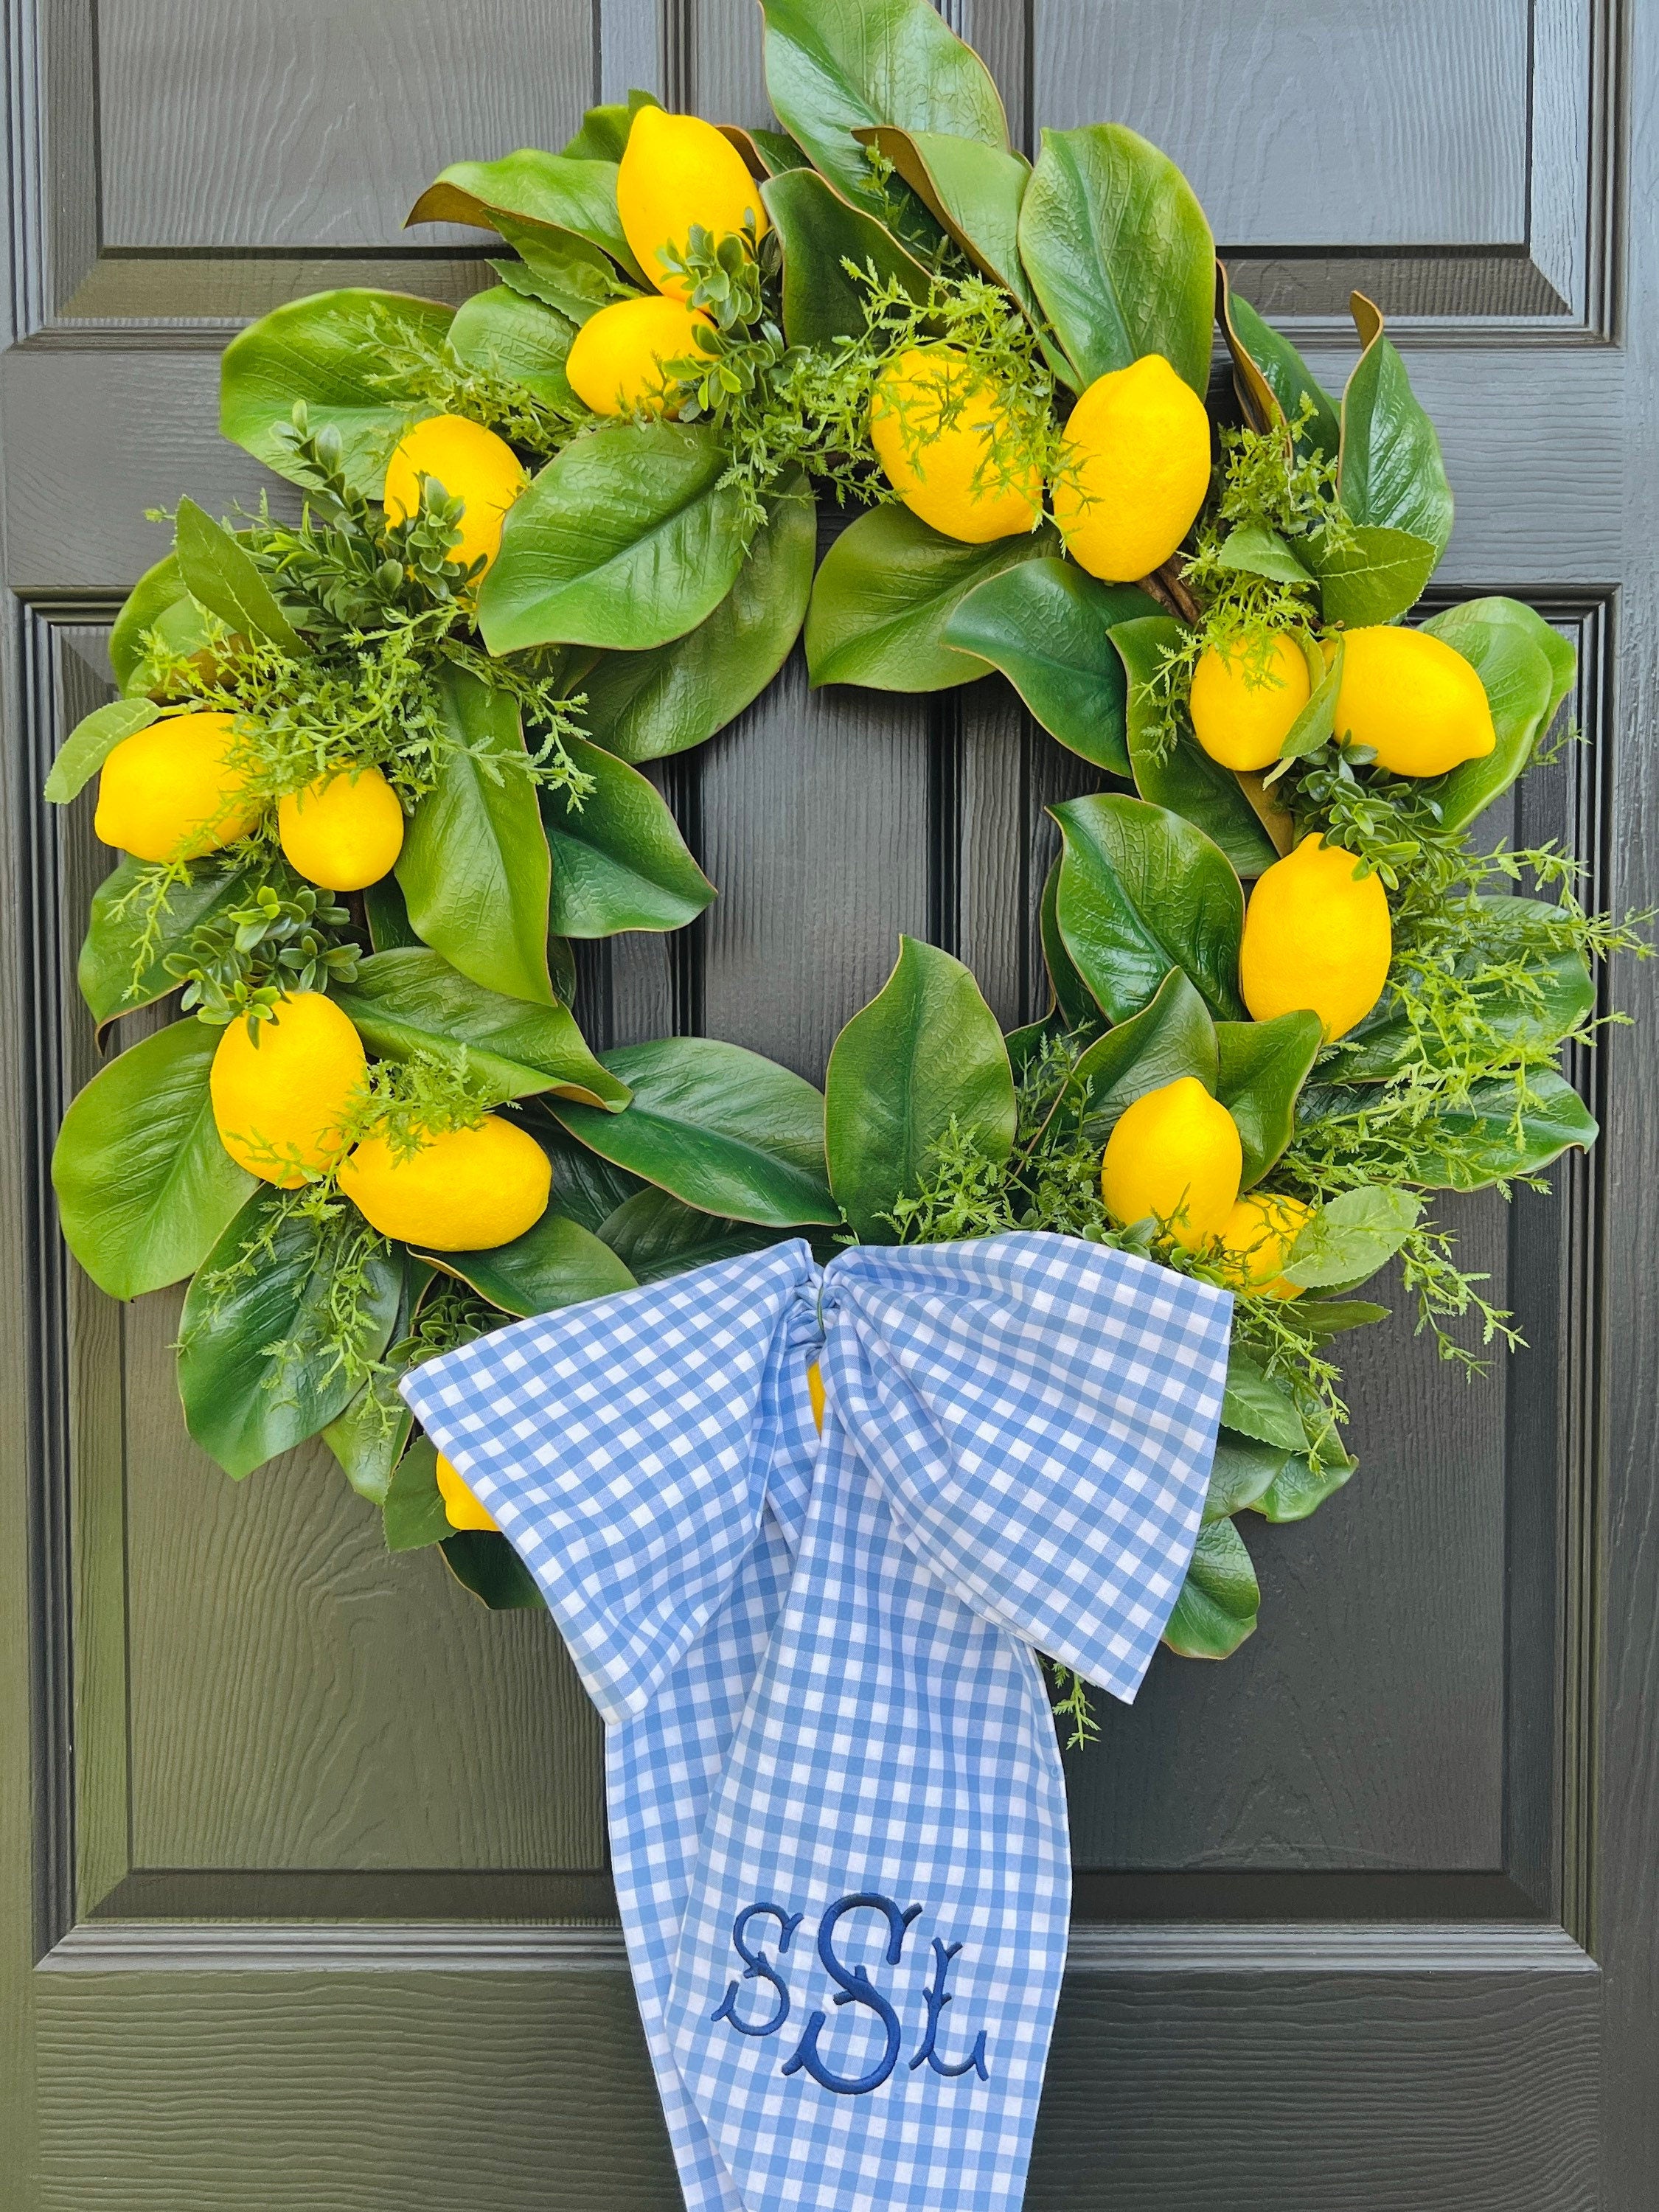 Lemon, magnolia, and boxwood wreath